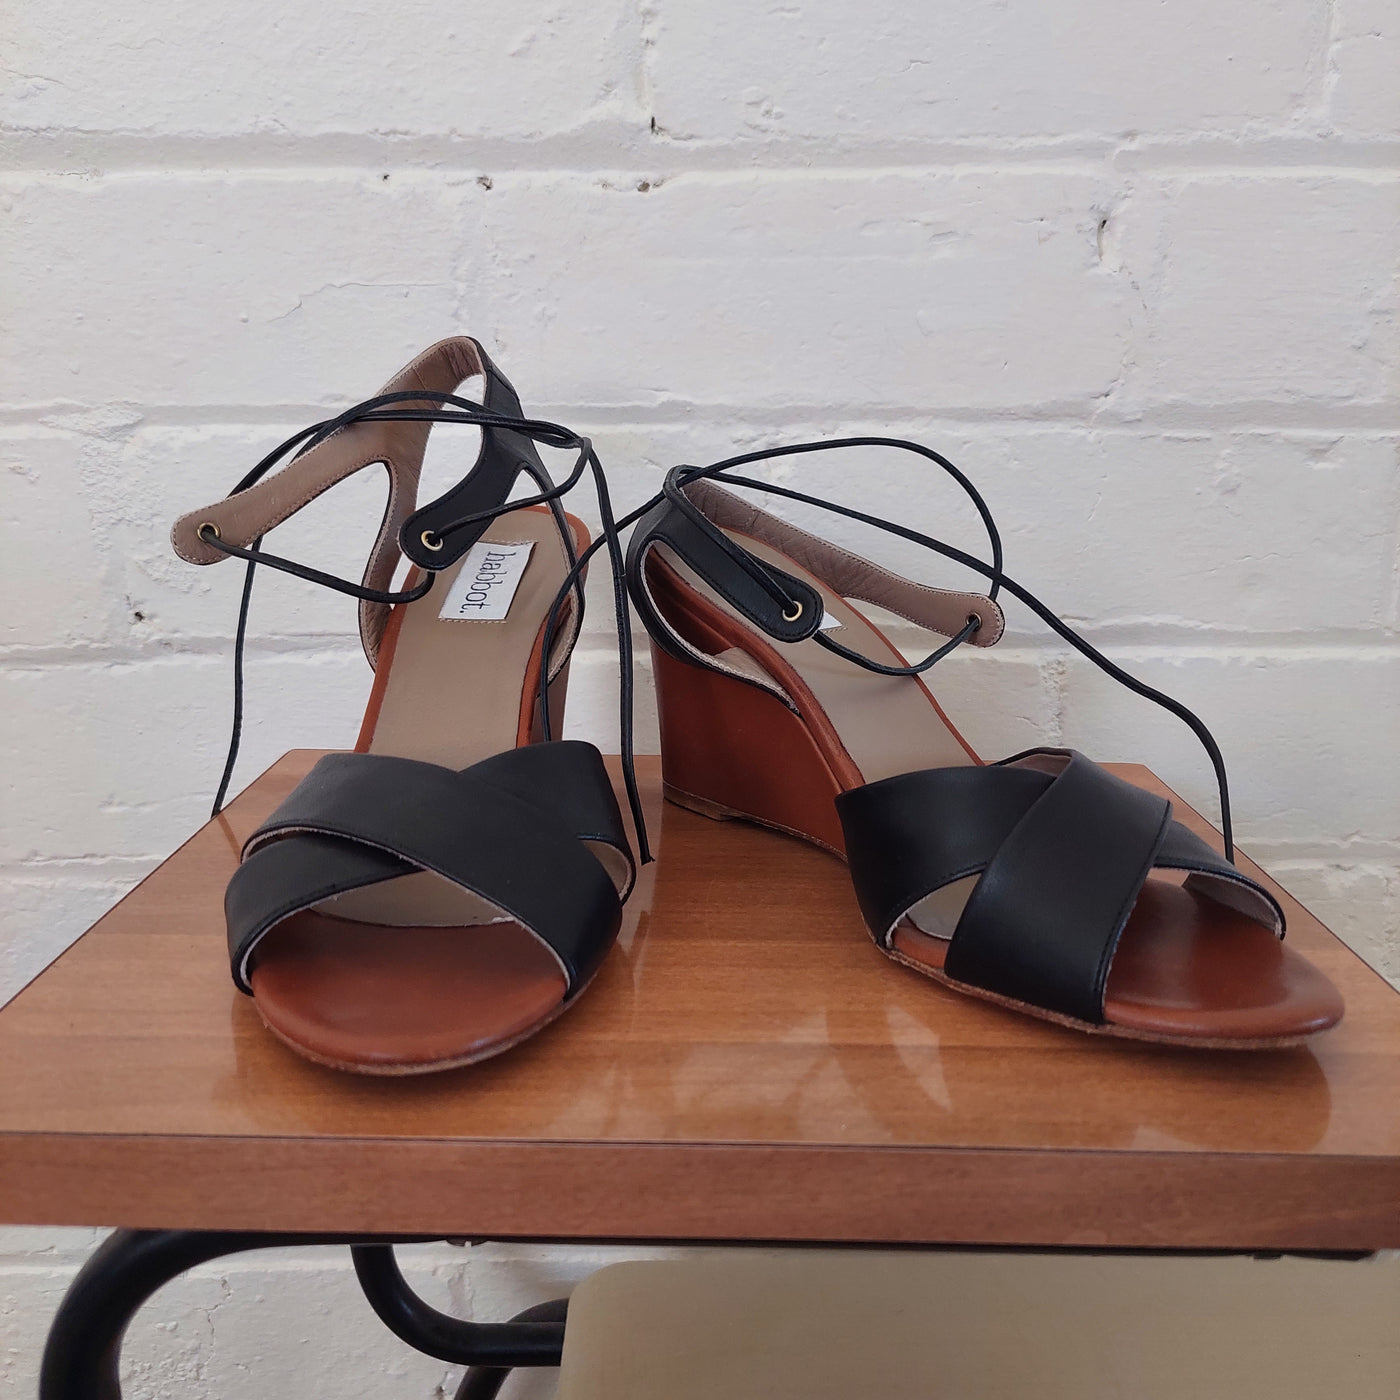 Habbot Strappy Wedge Sandals - Black Leather, Size EU 40 / AU 9